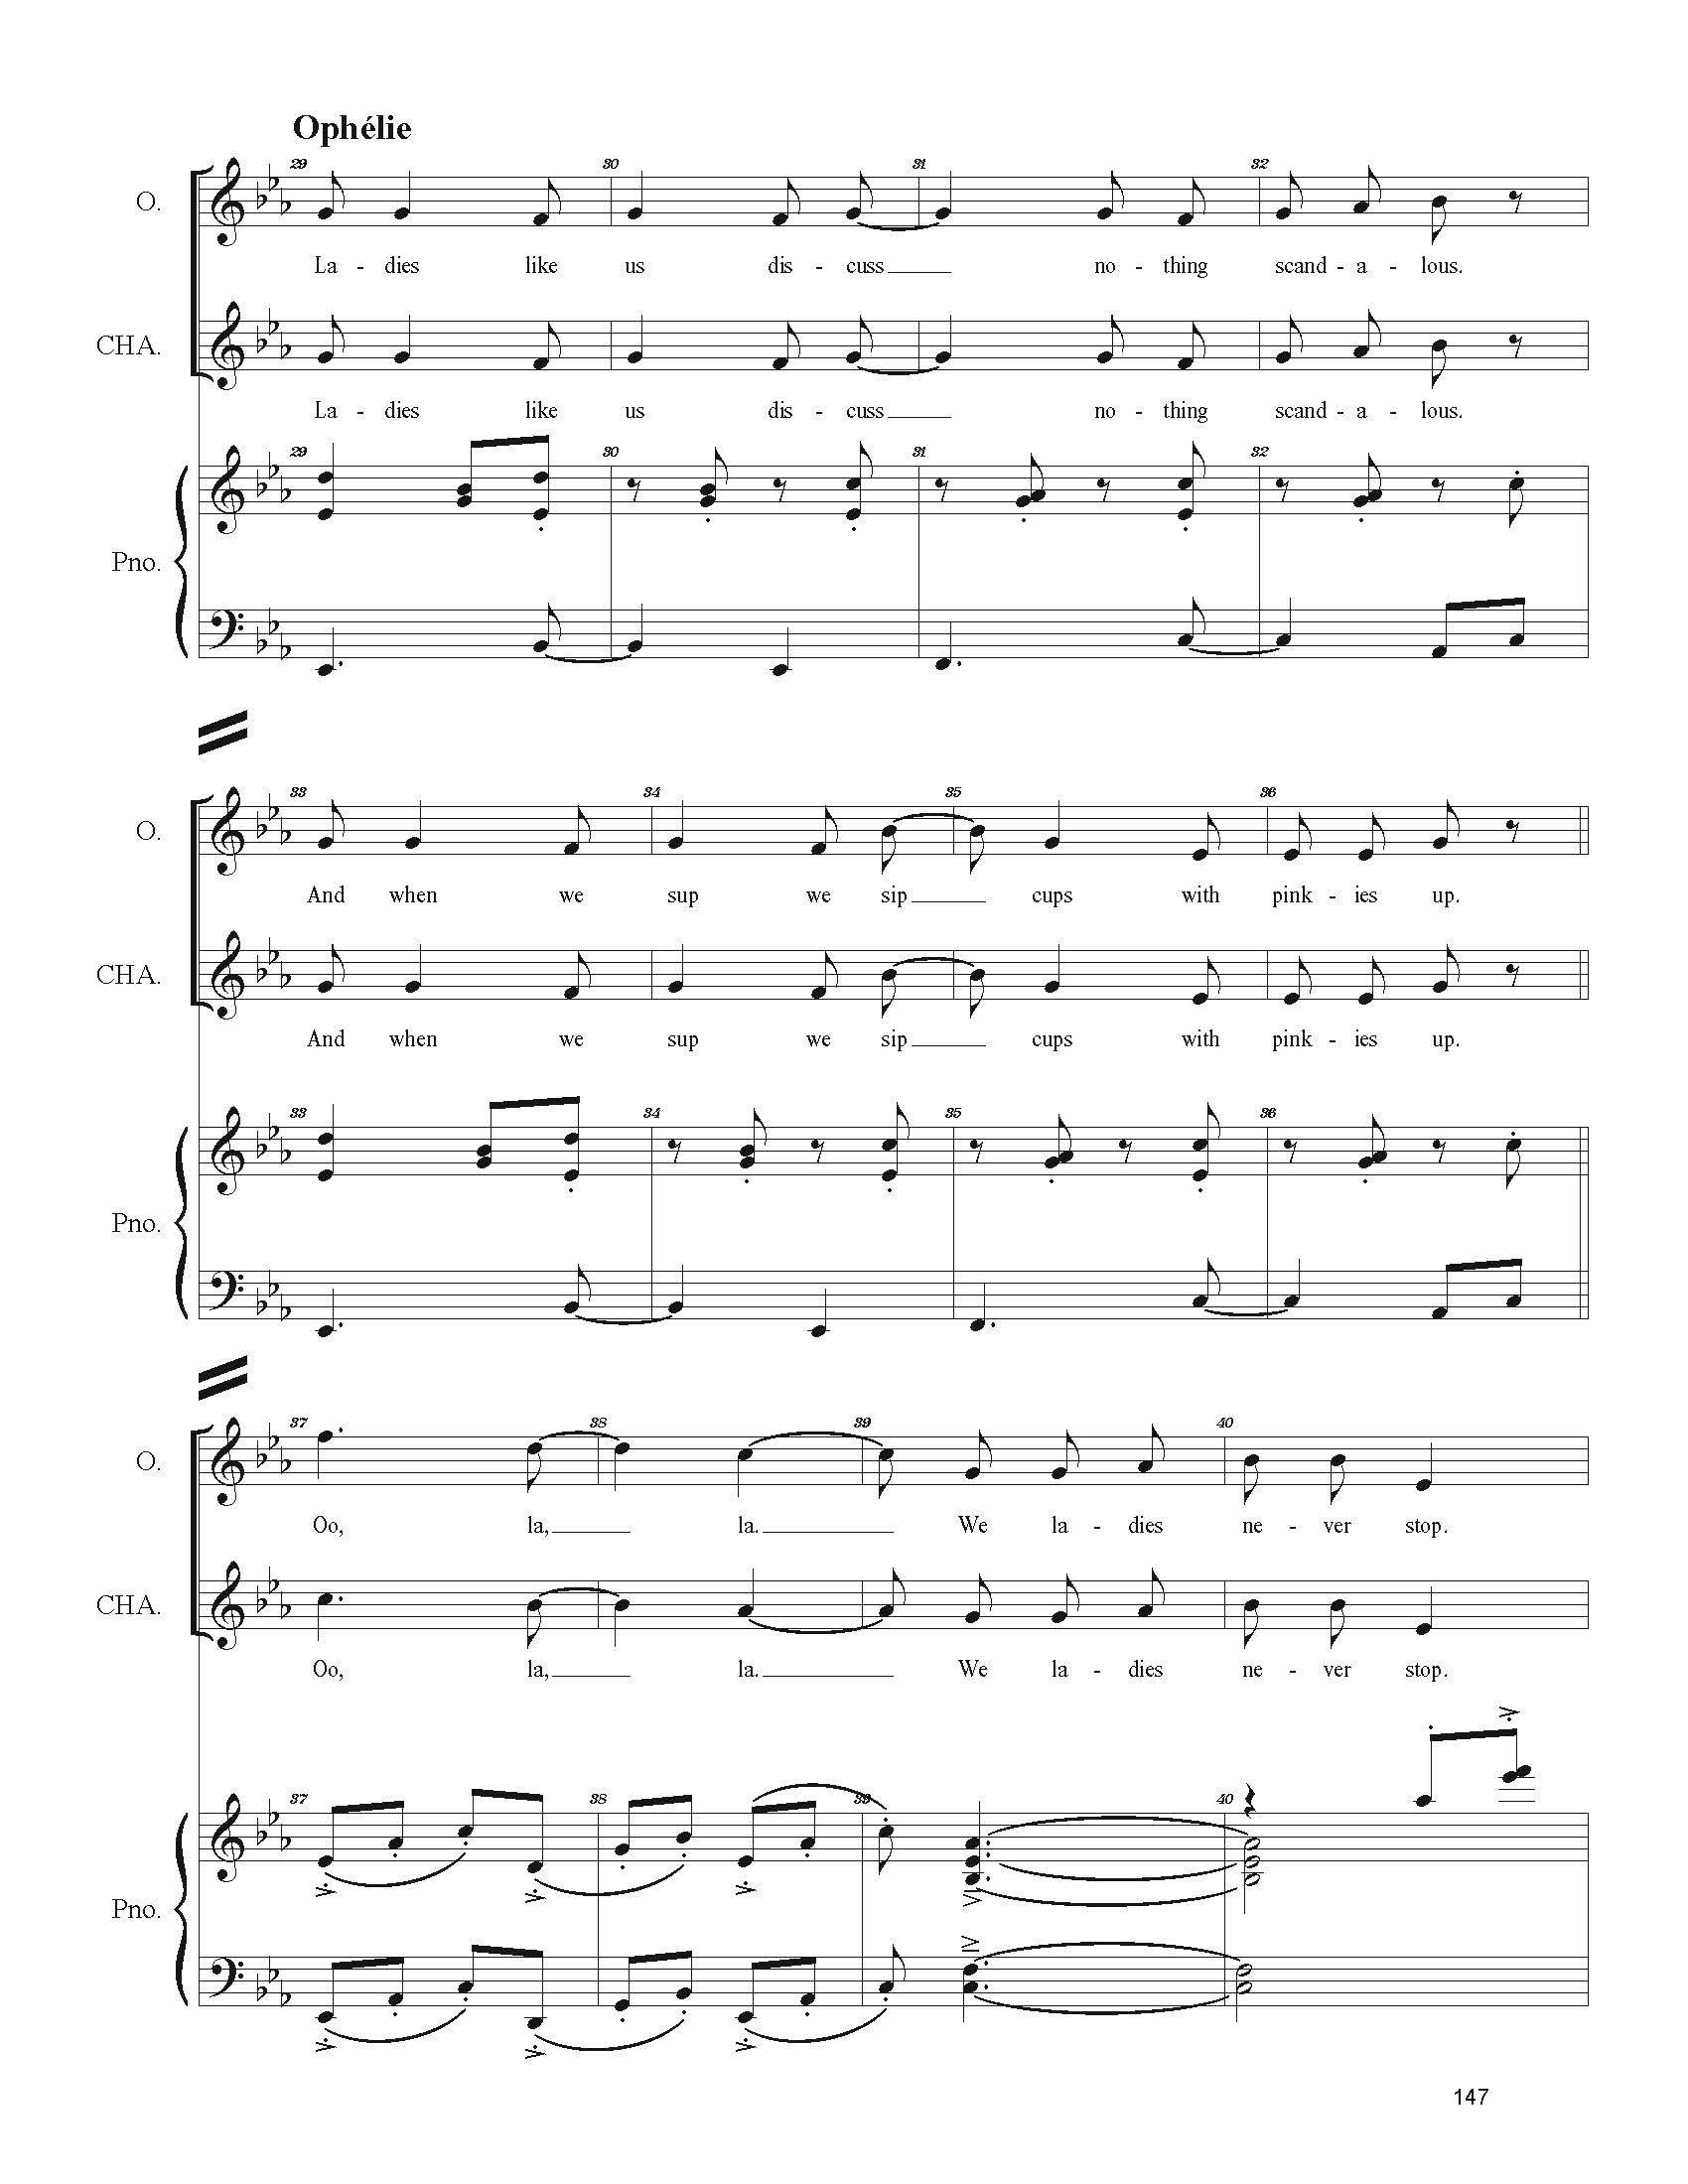 FULL PIANO VOCAL SCORE DRAFT 1 - Score_Page_147.jpg